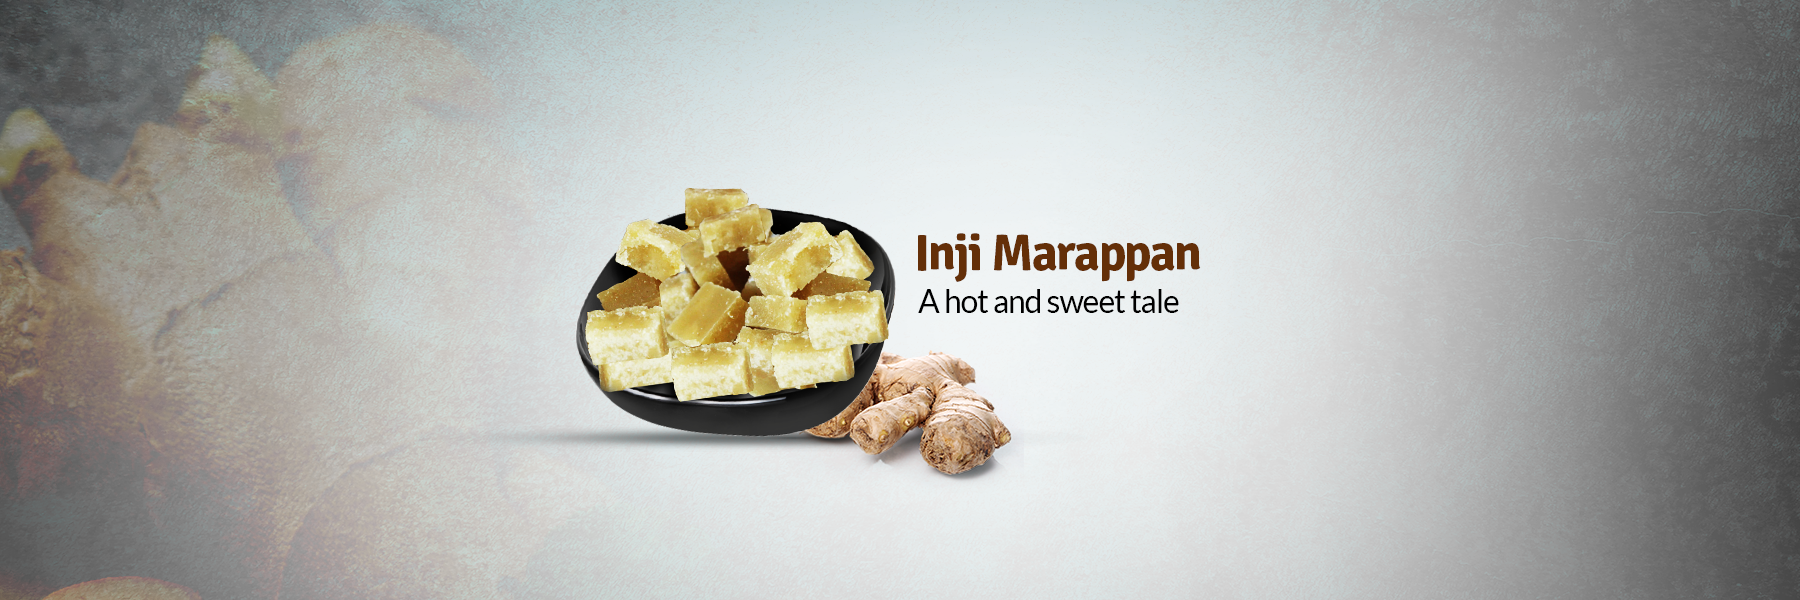 Inji Marappan : A hot and sweet tale FromIndia.com